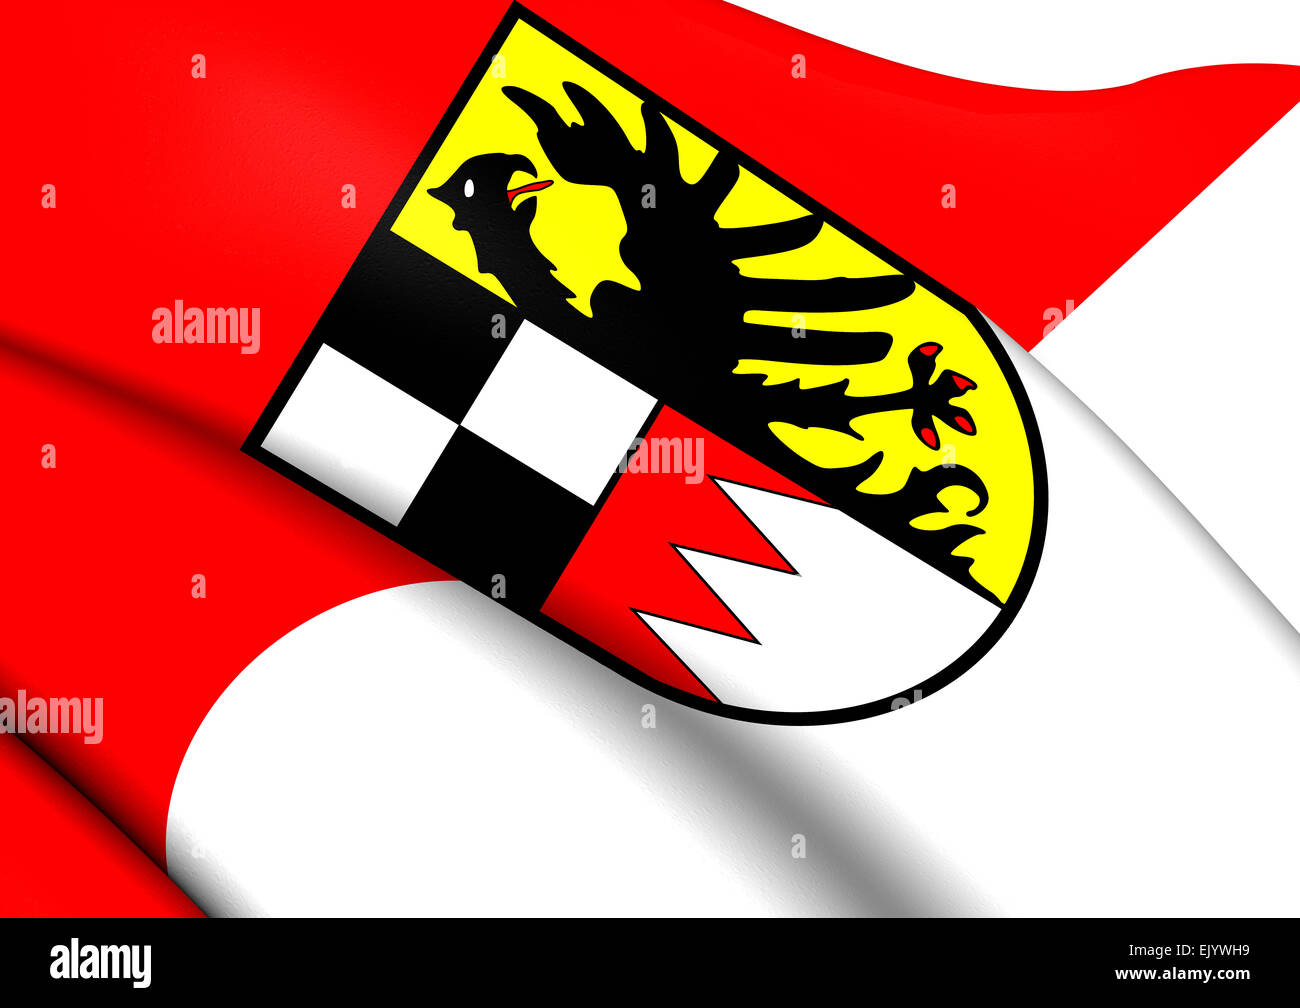 Bandiera della Media Franconia, Germania. Close up. Foto Stock